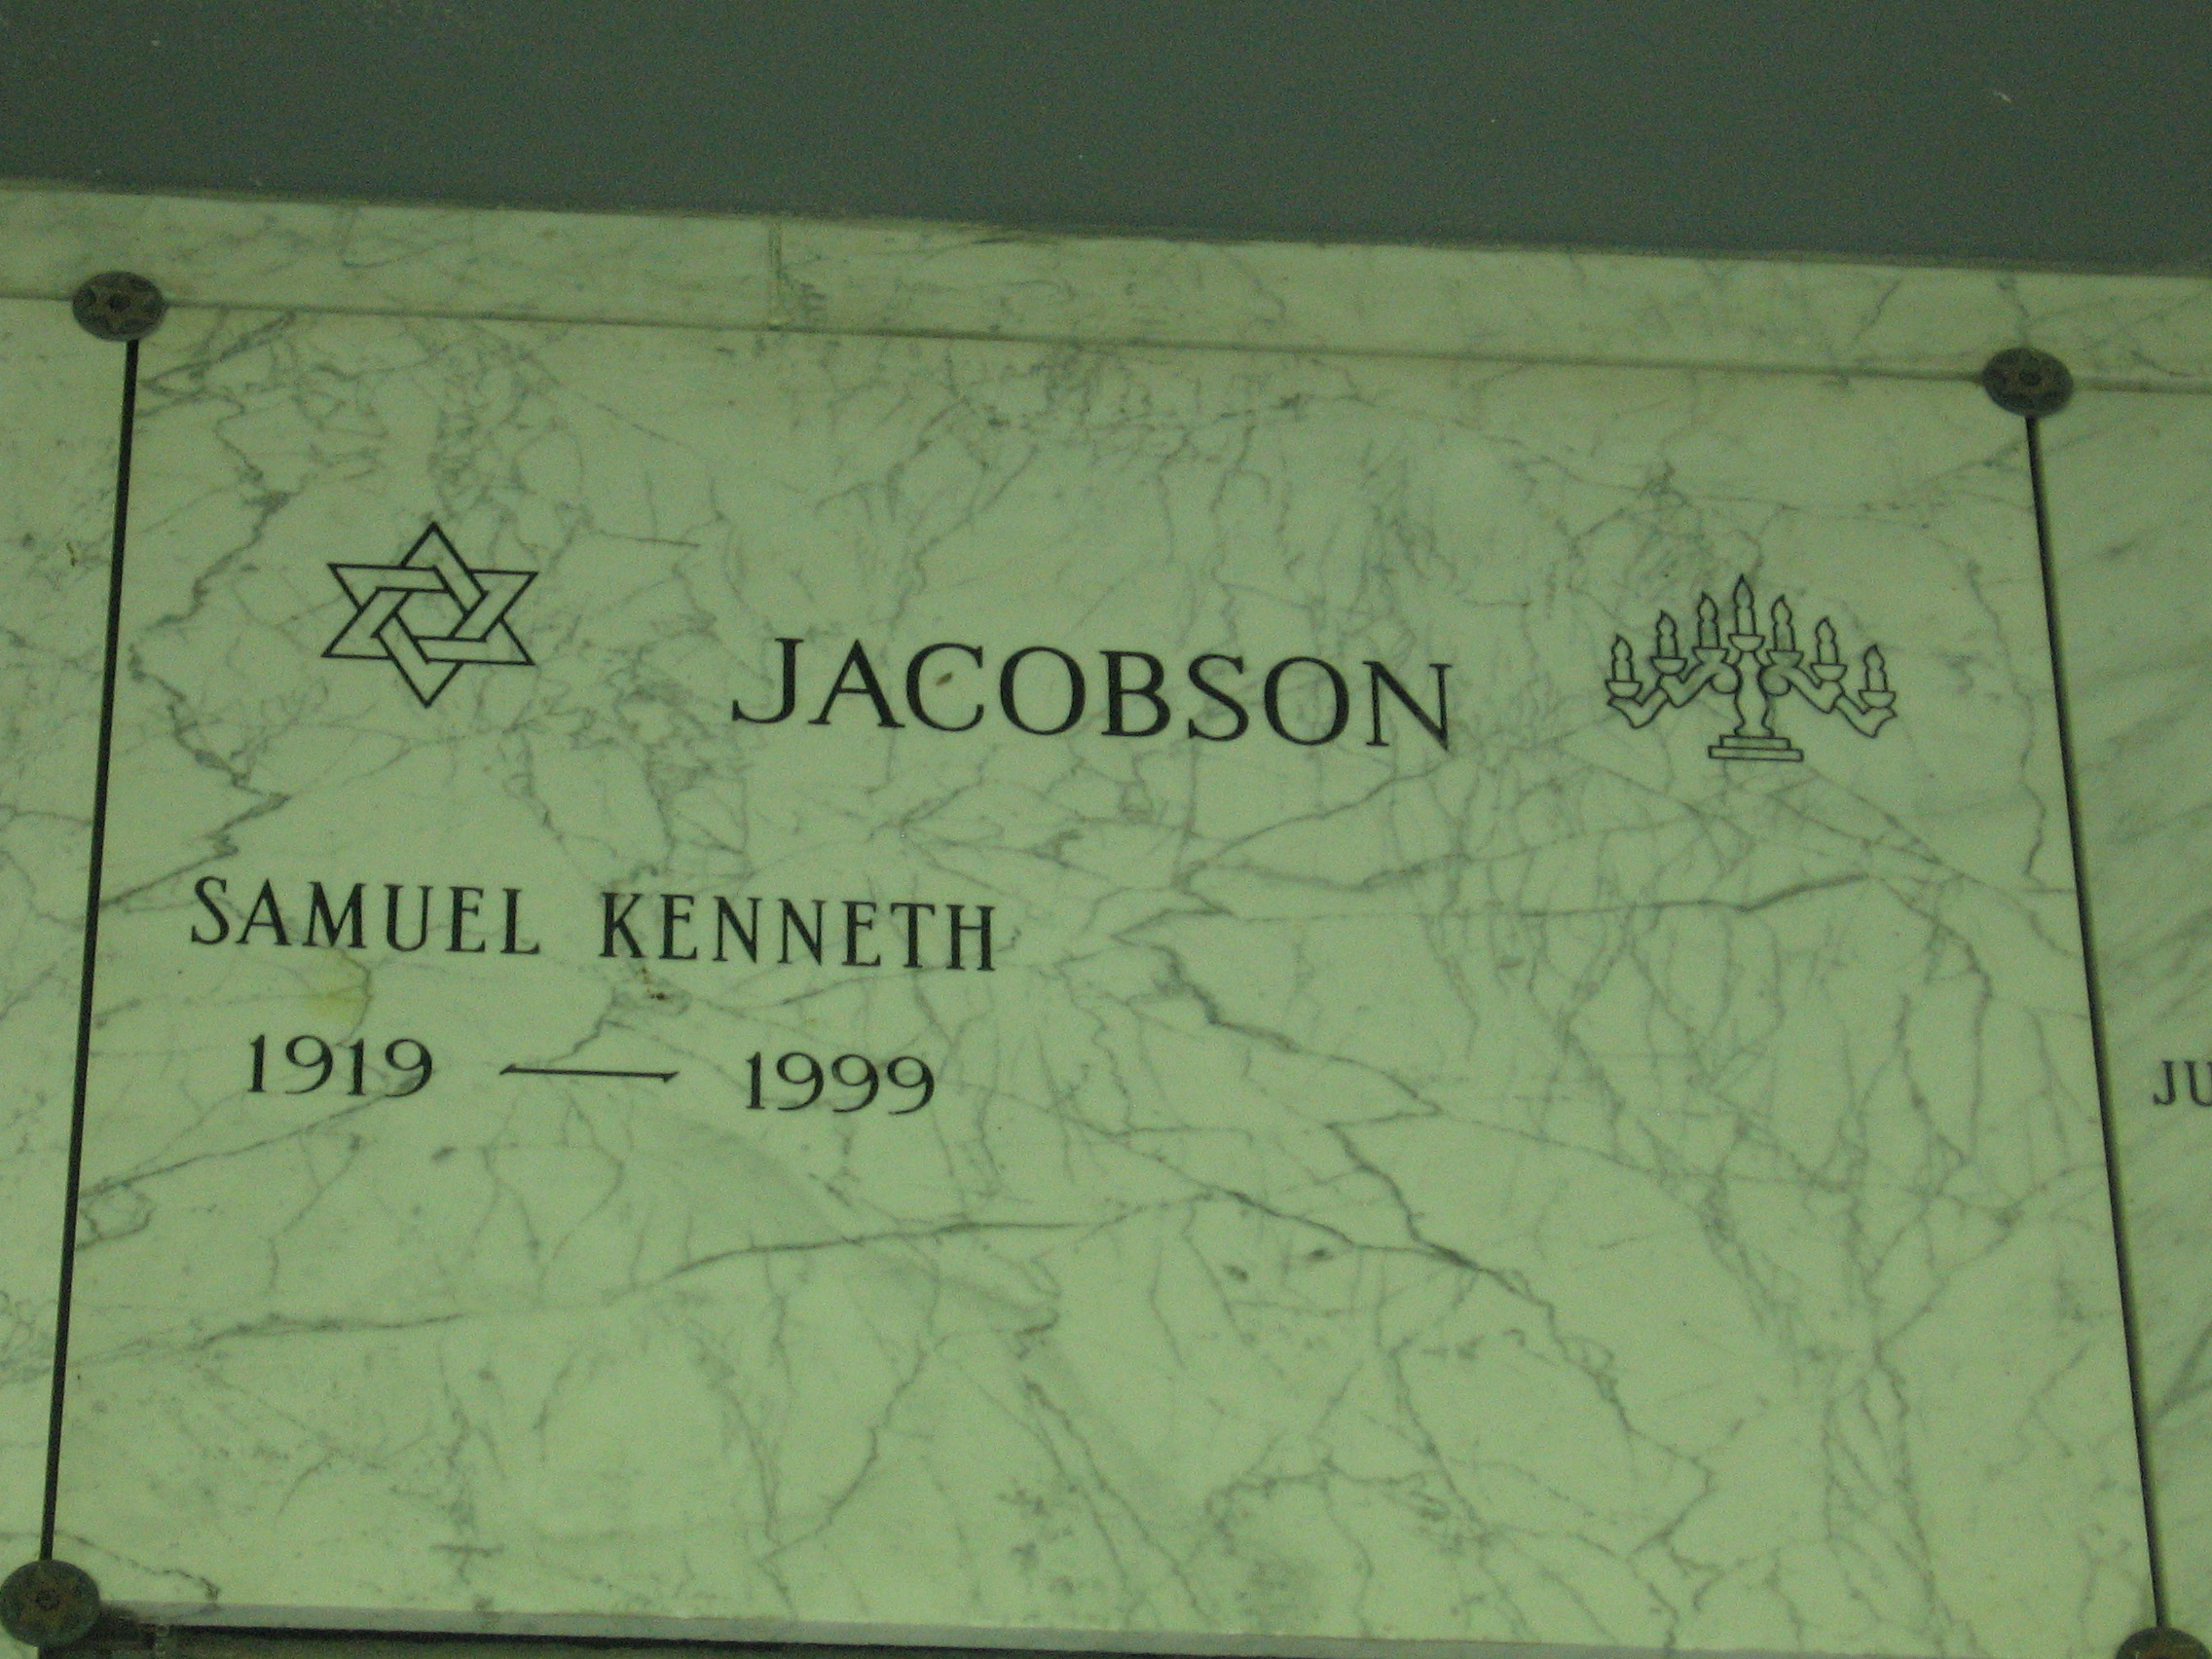 Samuel Kenneth Jacobson